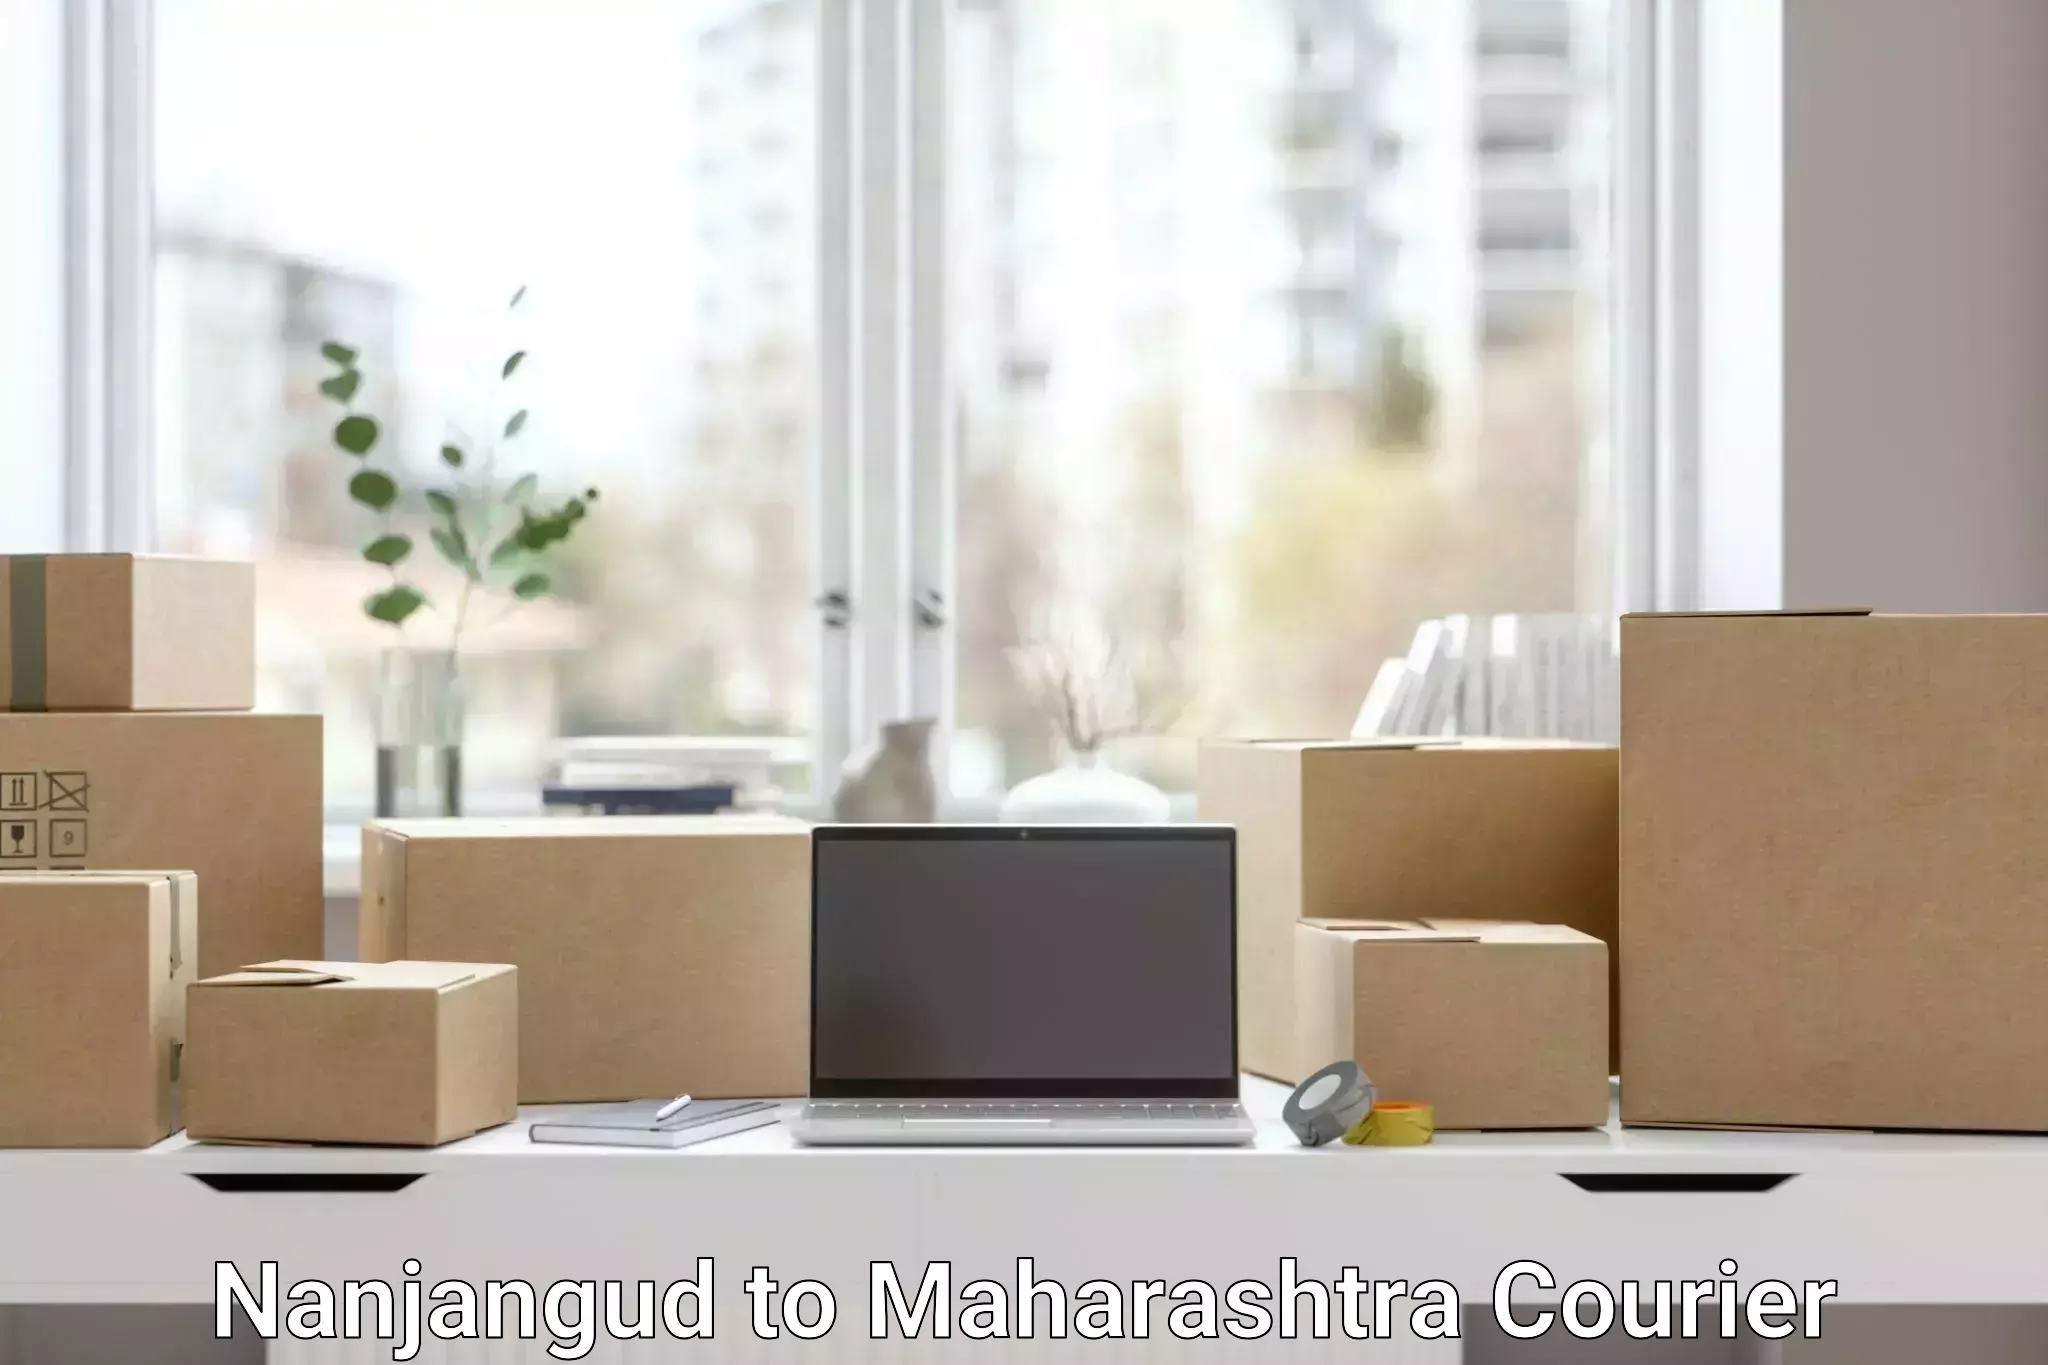 Advanced parcel tracking in Nanjangud to Maharashtra